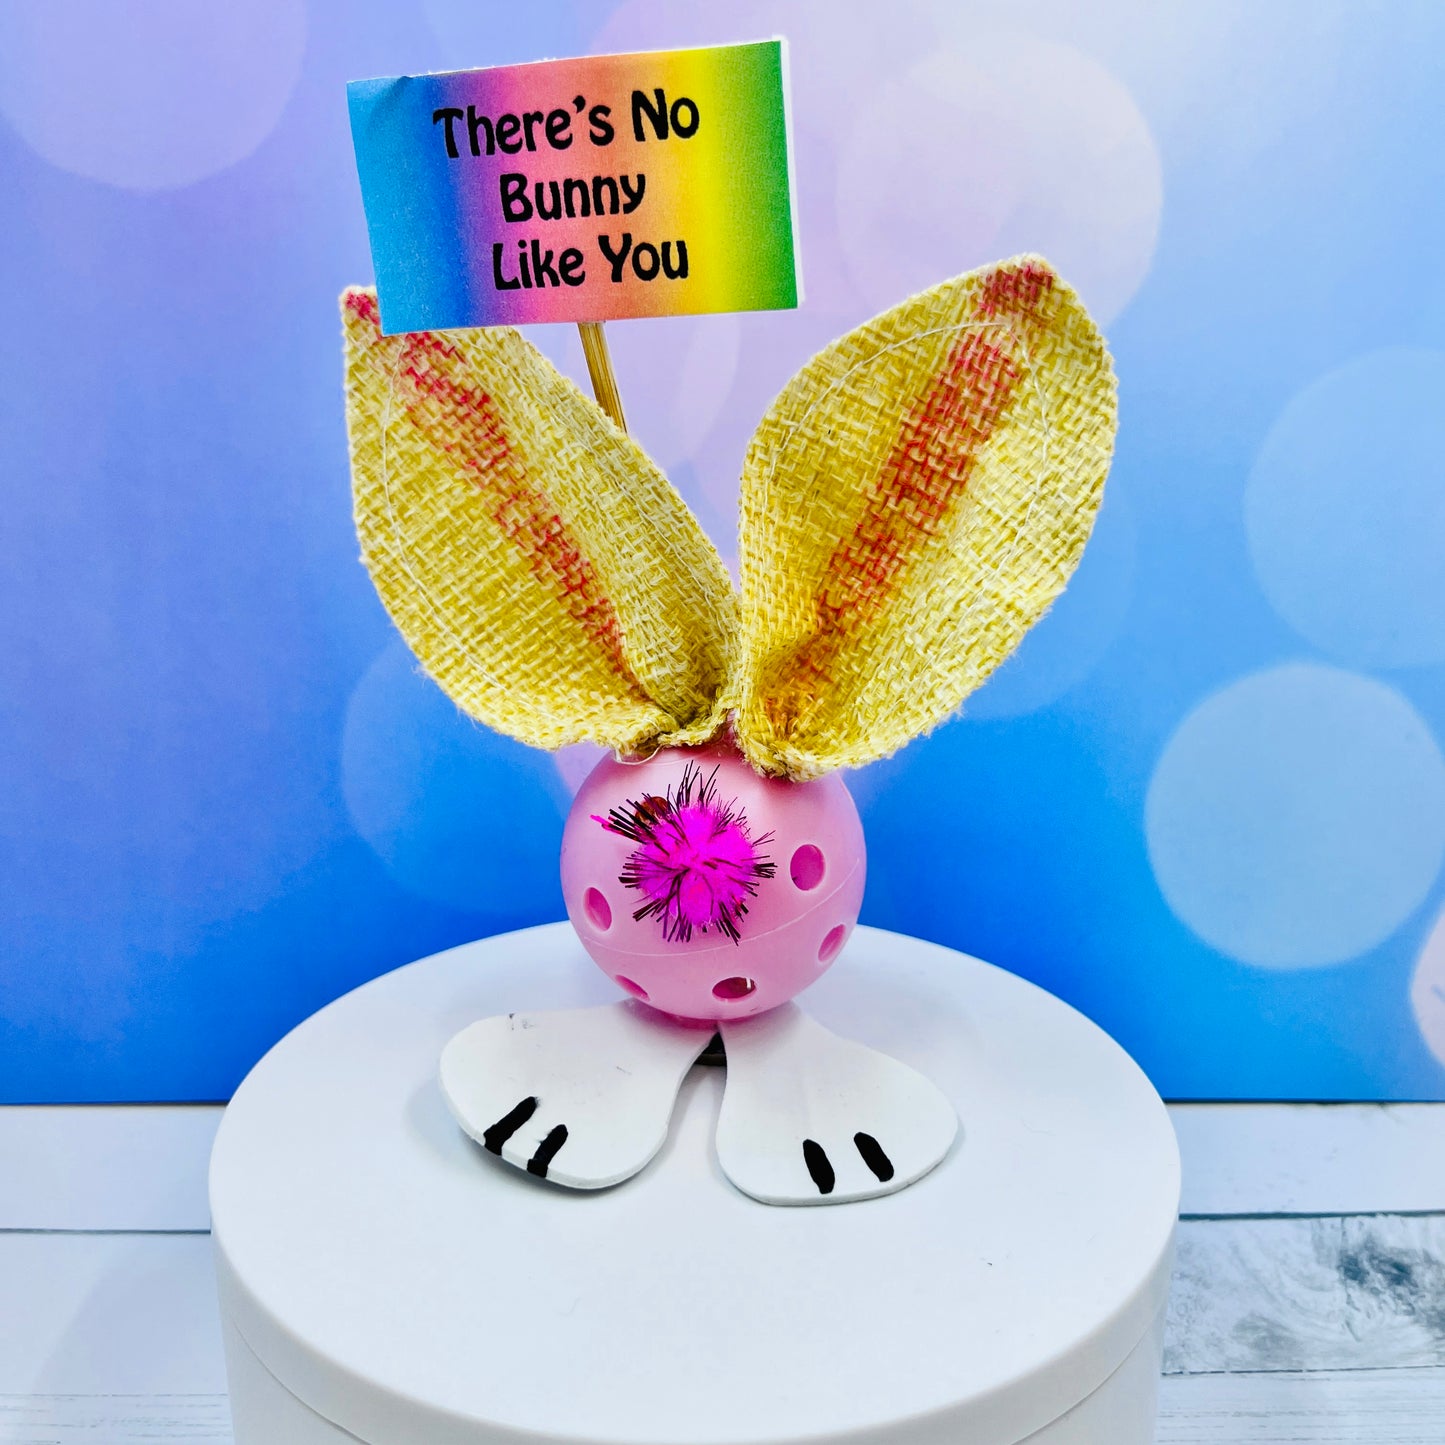 Mini Easter Pickleball Gnomes | Pickleball Easter Gifts And Decor